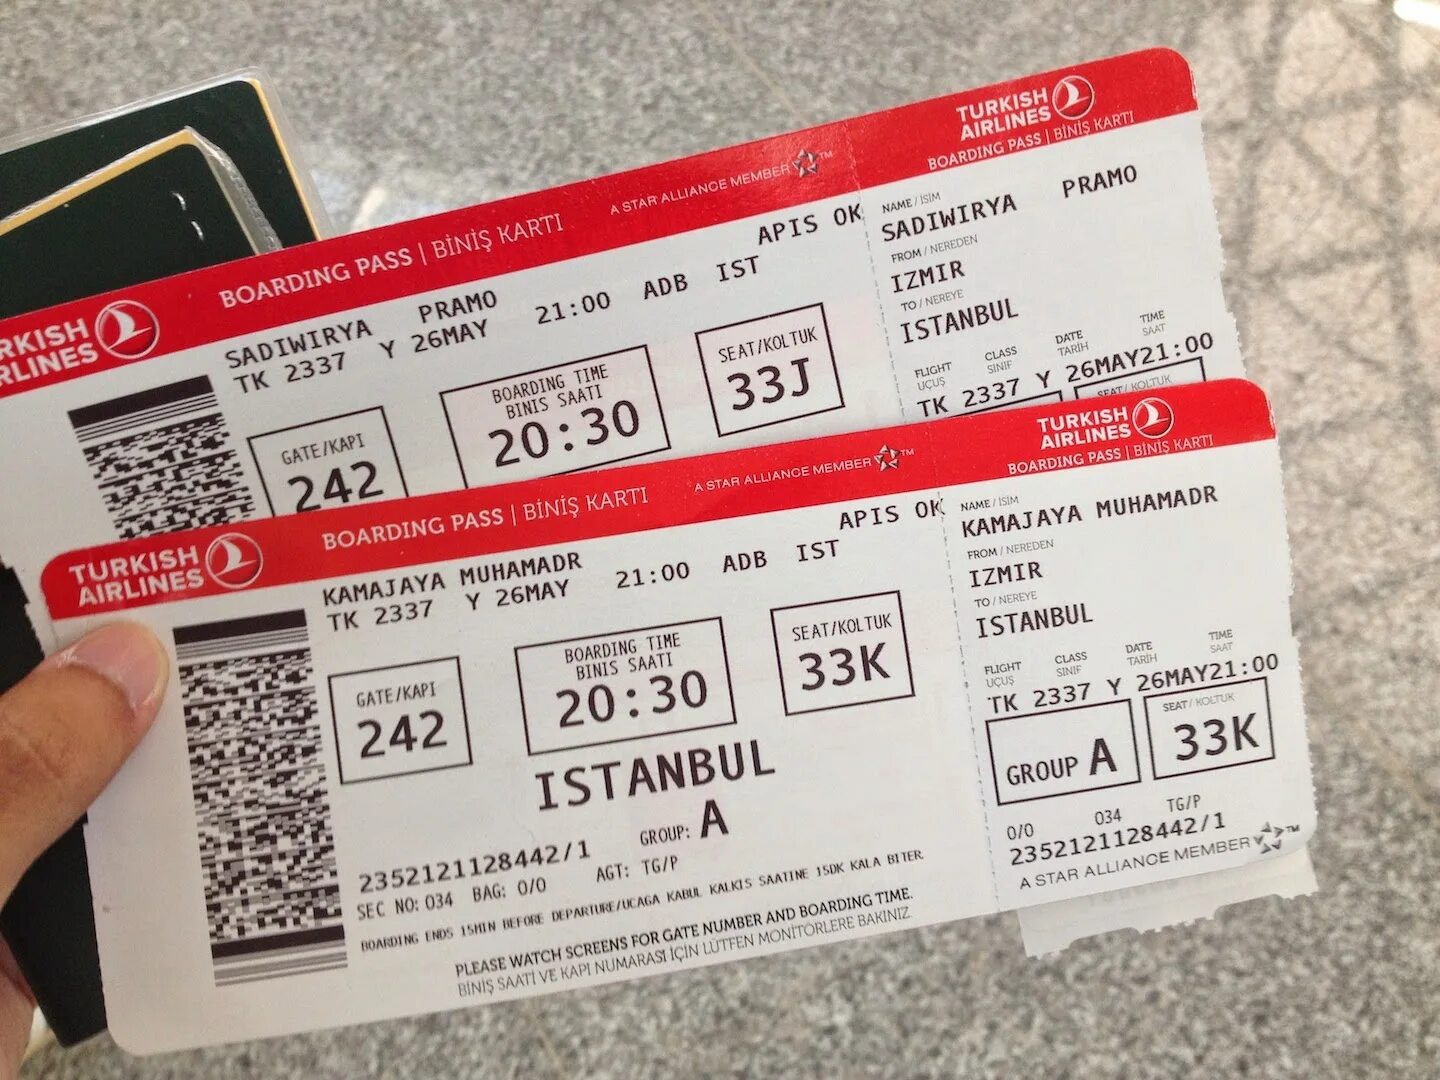 30 ноября билеты. Посадочный билет Туркиш Эйрлайнс. Turkish Airlines на билетах посадочных. Стамбул билеты на самолет. Электронный билет Туркиш Эйрлайнс.